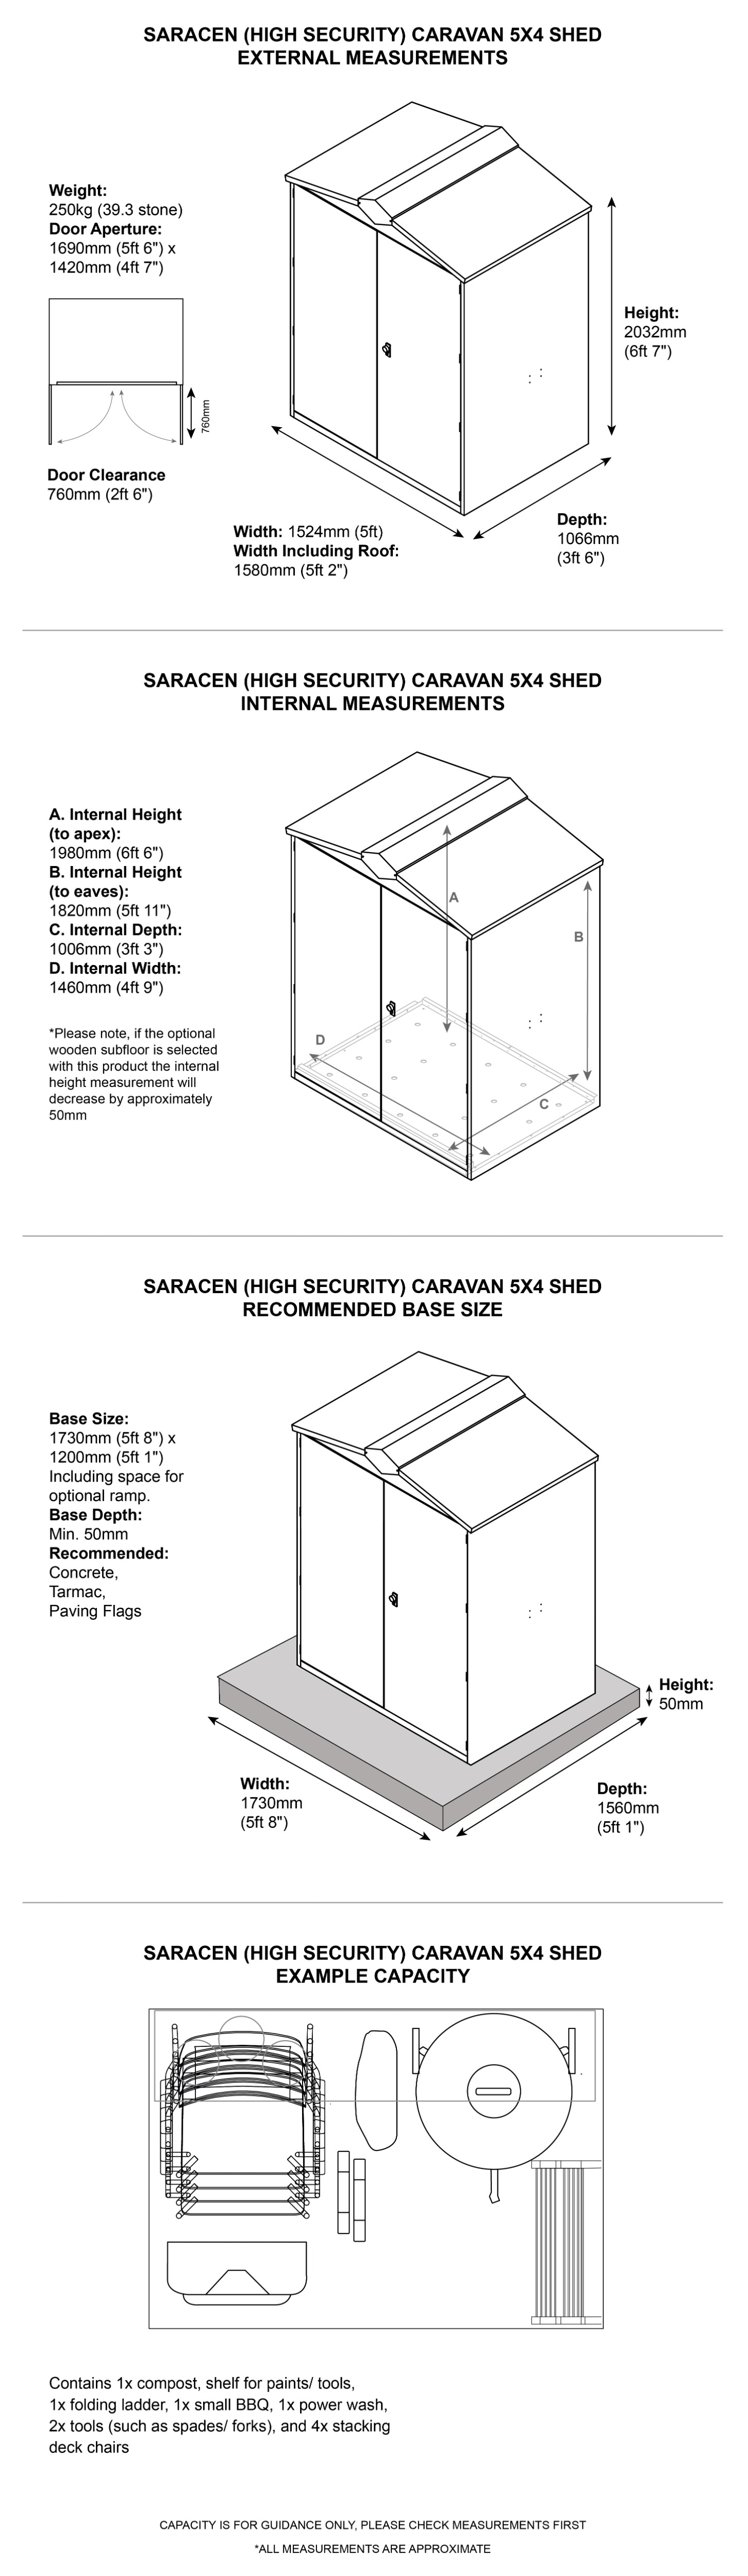 5x4 Caravan Storage (The Saracen) - Police Preferred Specification Dimensions